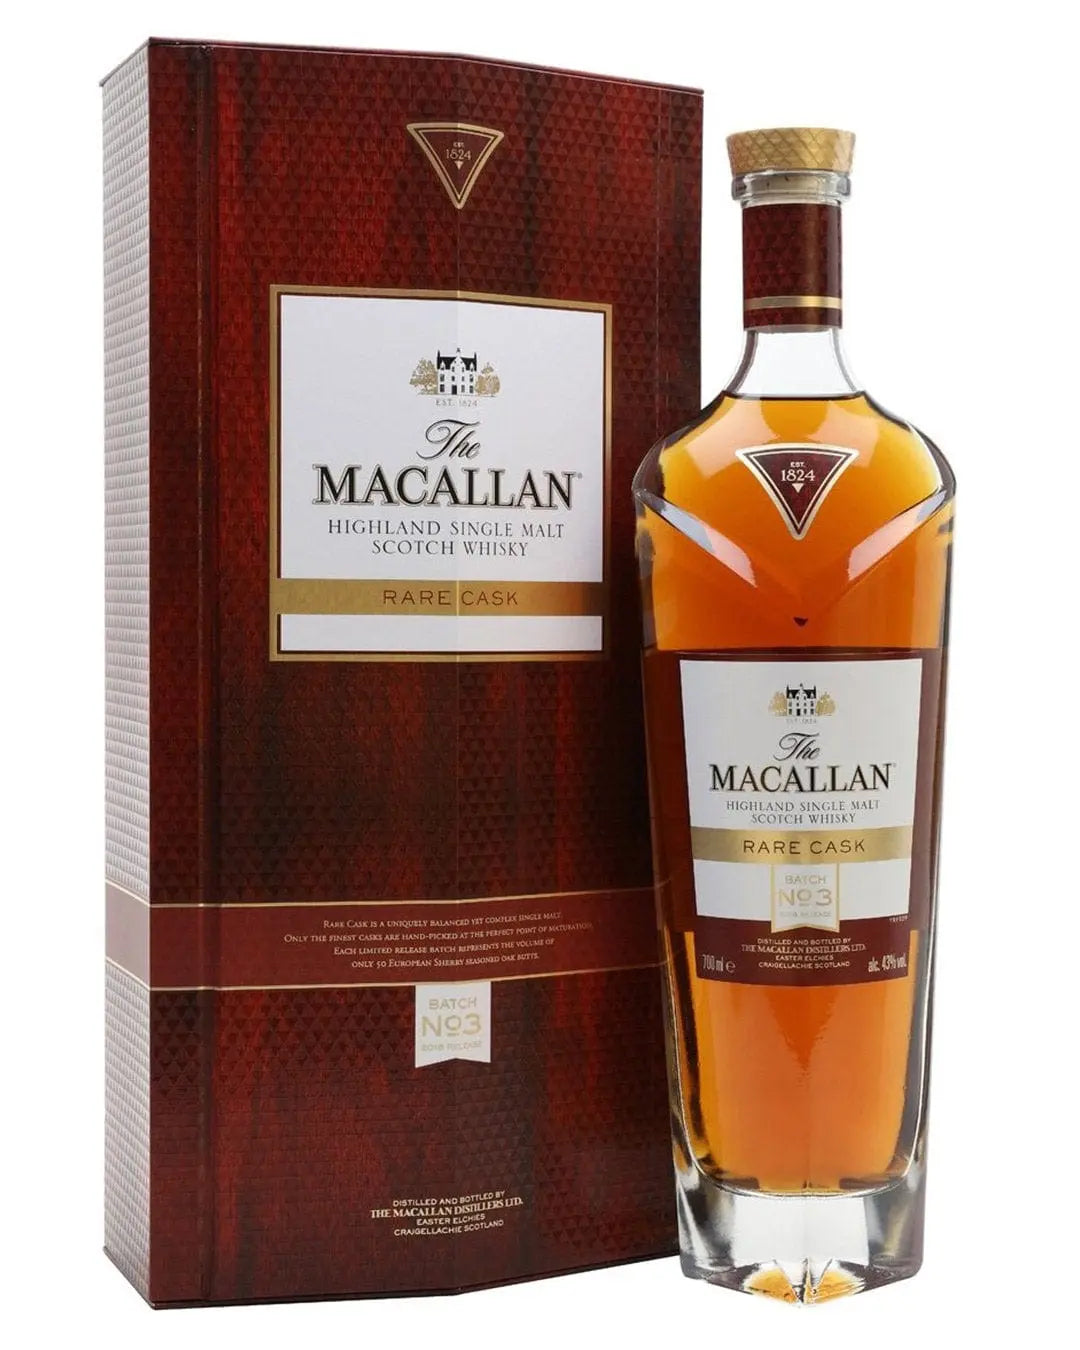 Macallan Rare Cask - Batch No. 3 - 2018 Release Whisky, 70 cl Whisky 5010314301712